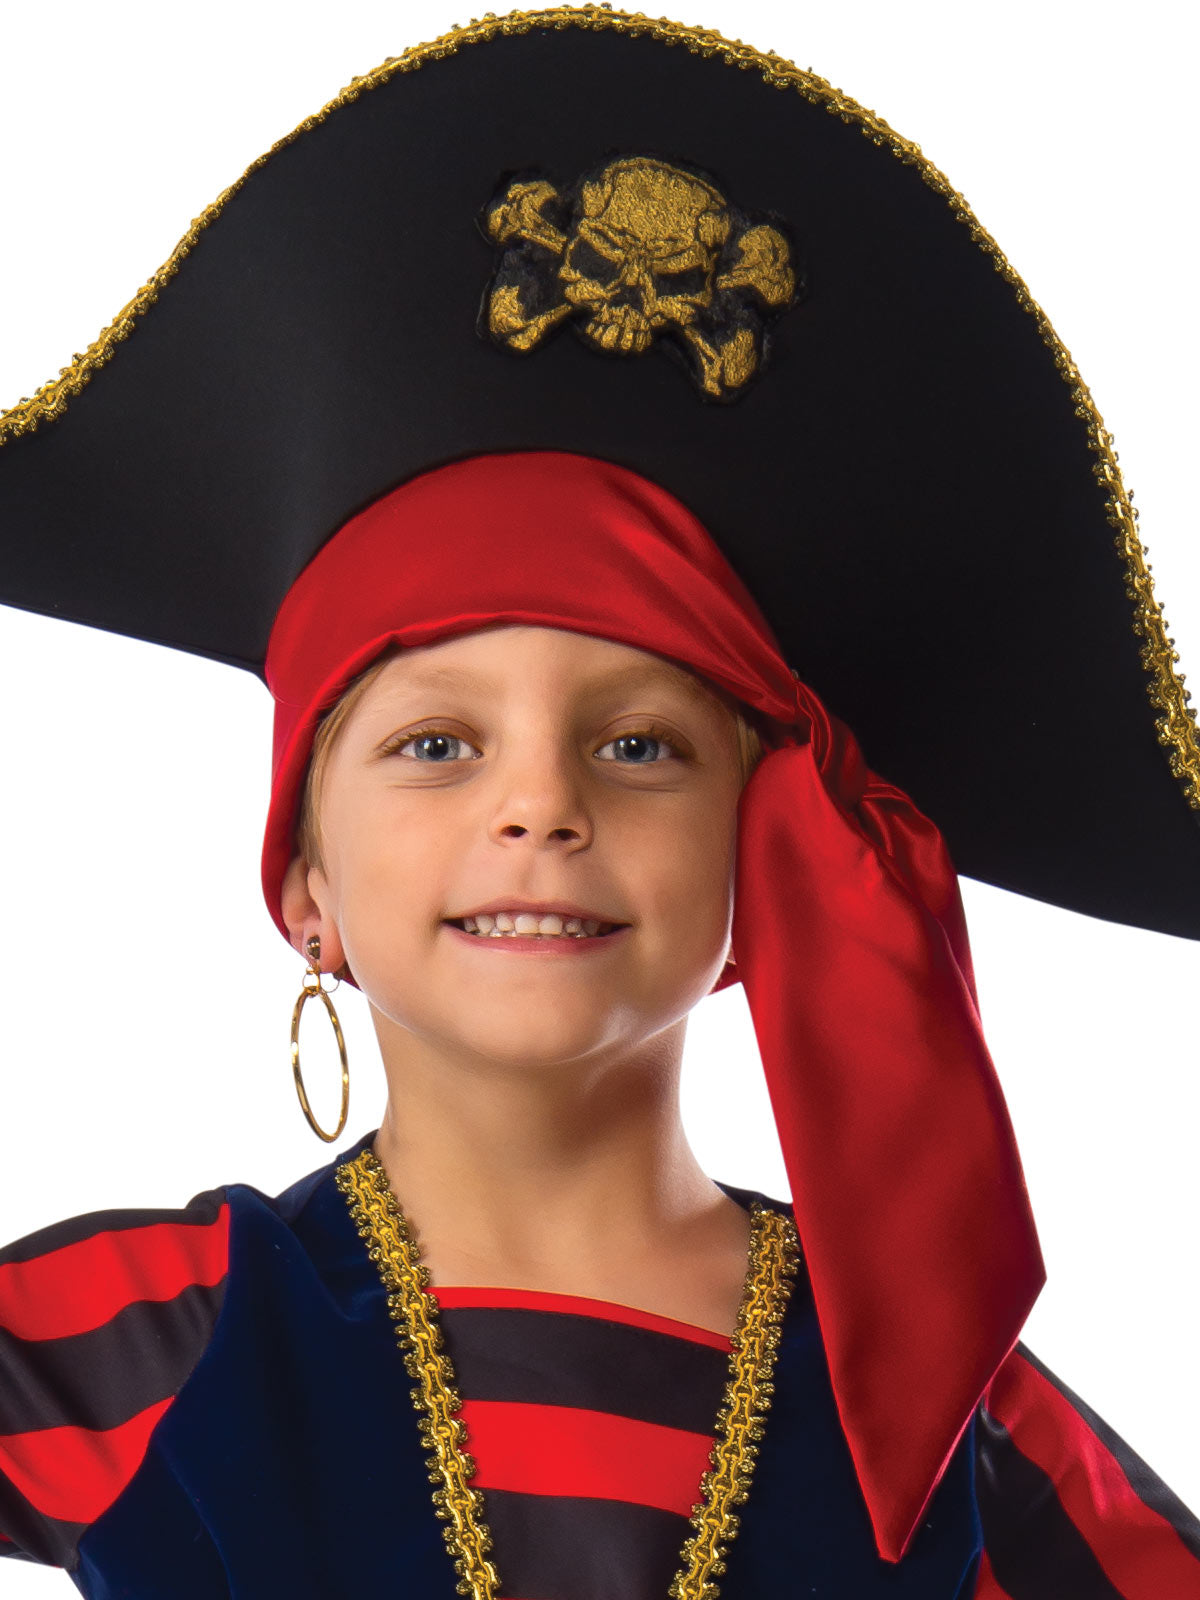 Shipmate Boys Pirate Child Costume